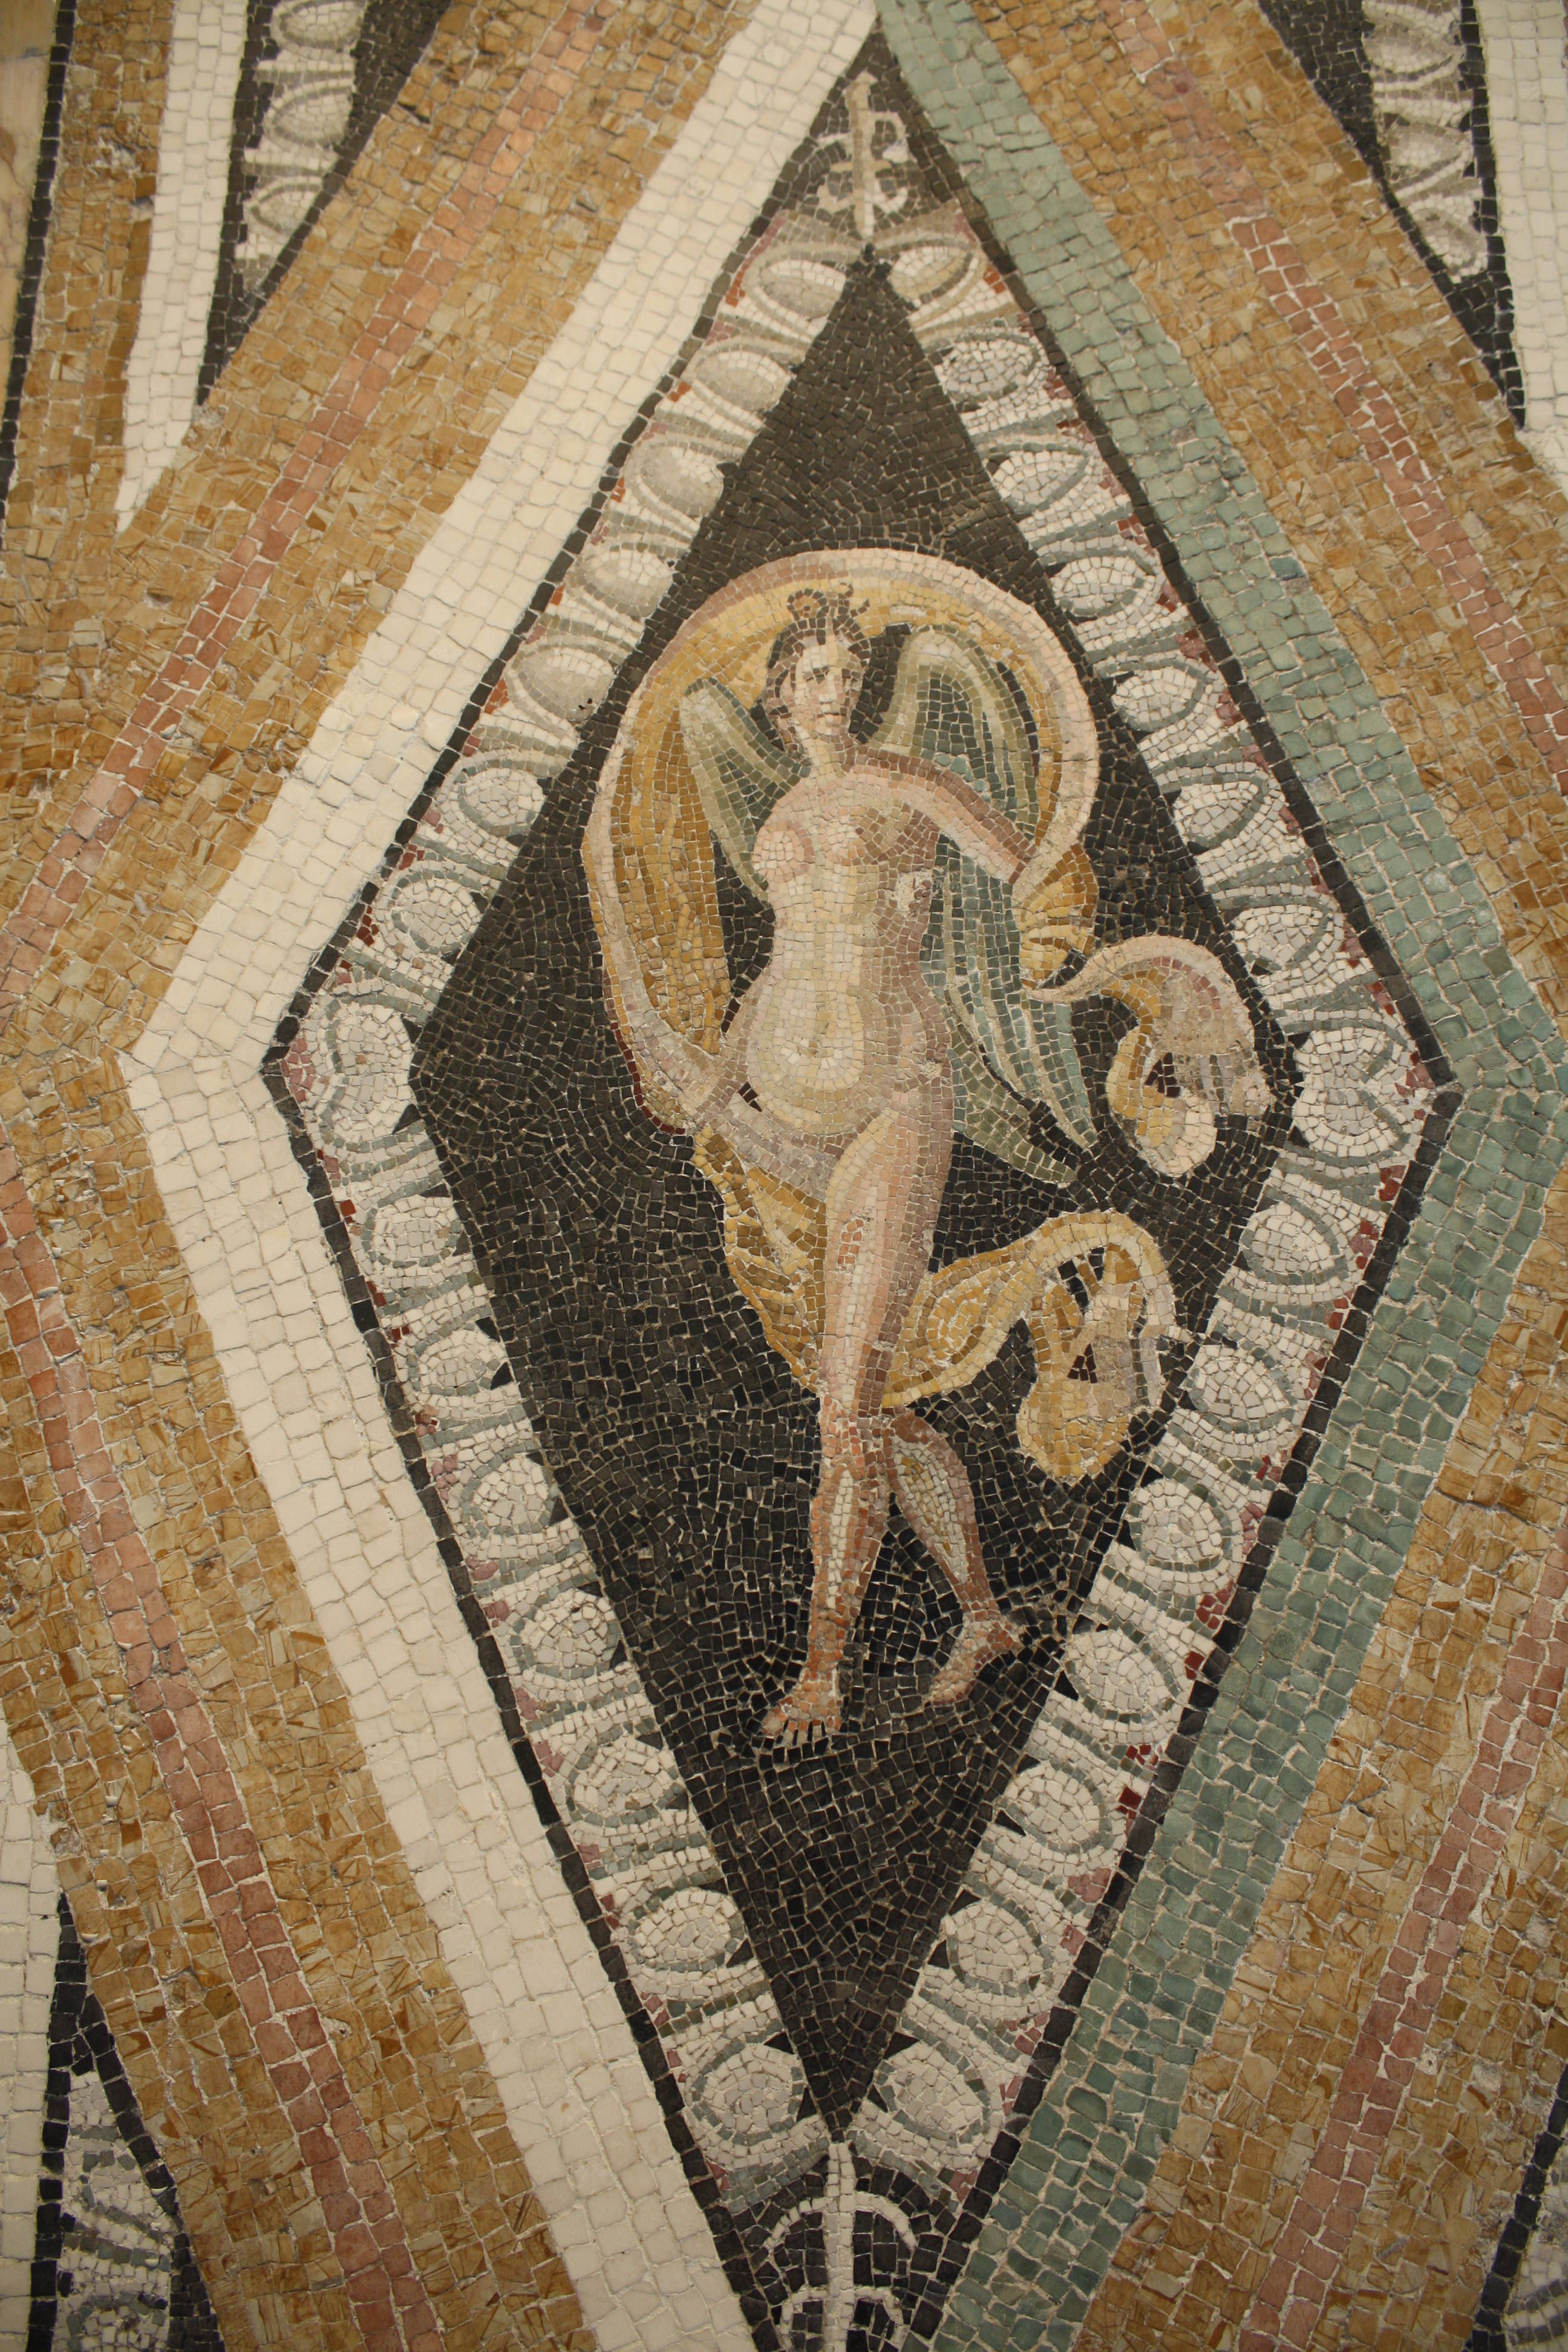 Lobo con piel de cordero Observación papa Nike, Roman Mosaic (Illustration) - World History Encyclopedia